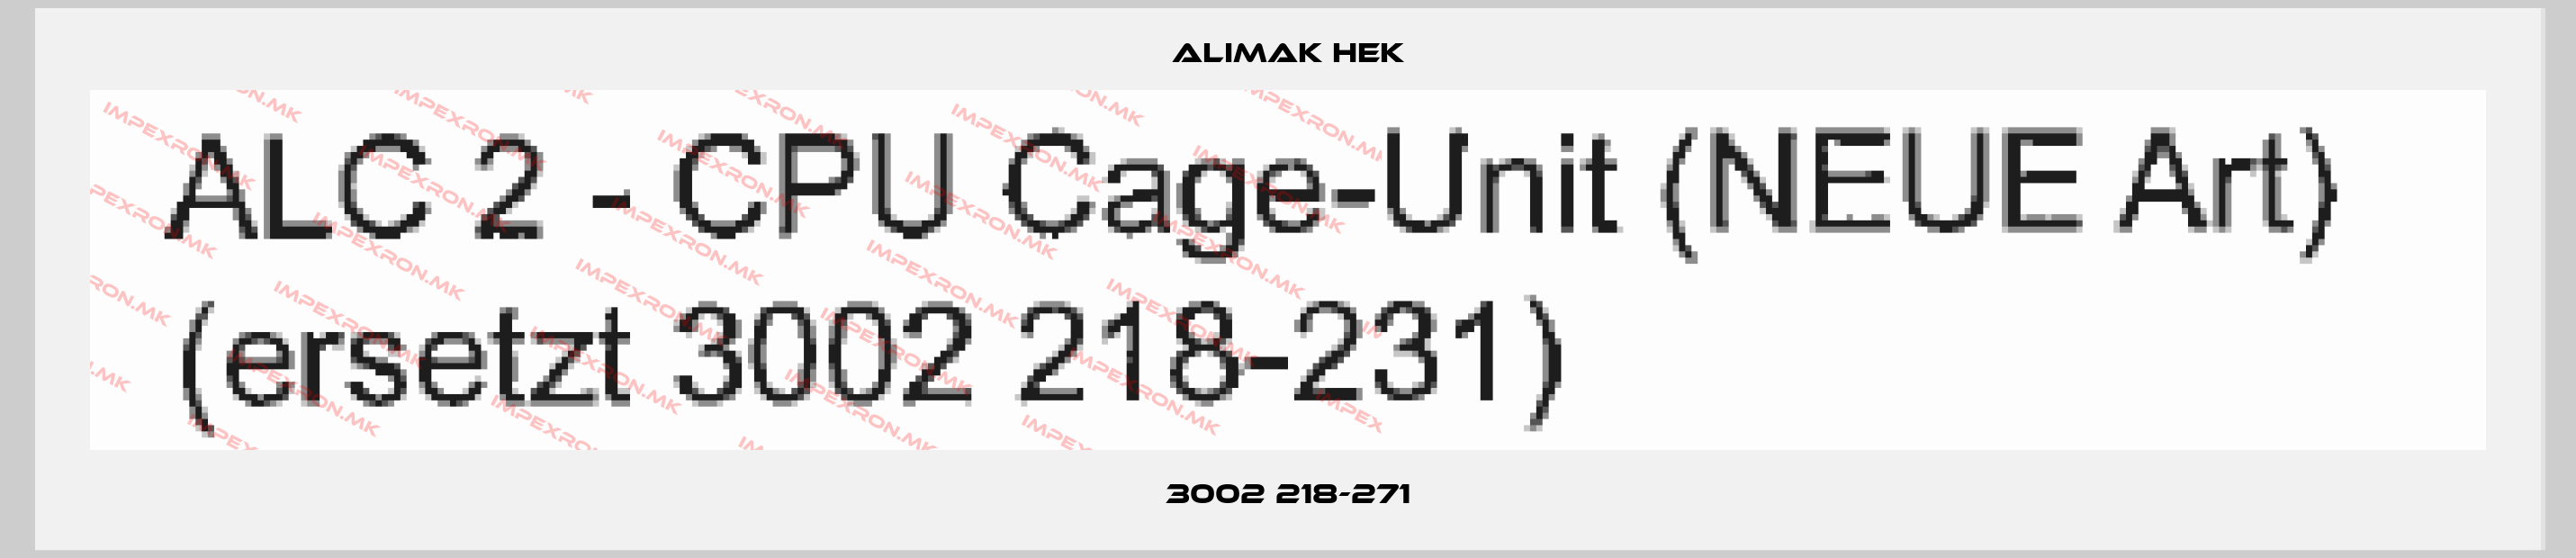 Alimak Hek-3002 218-271price